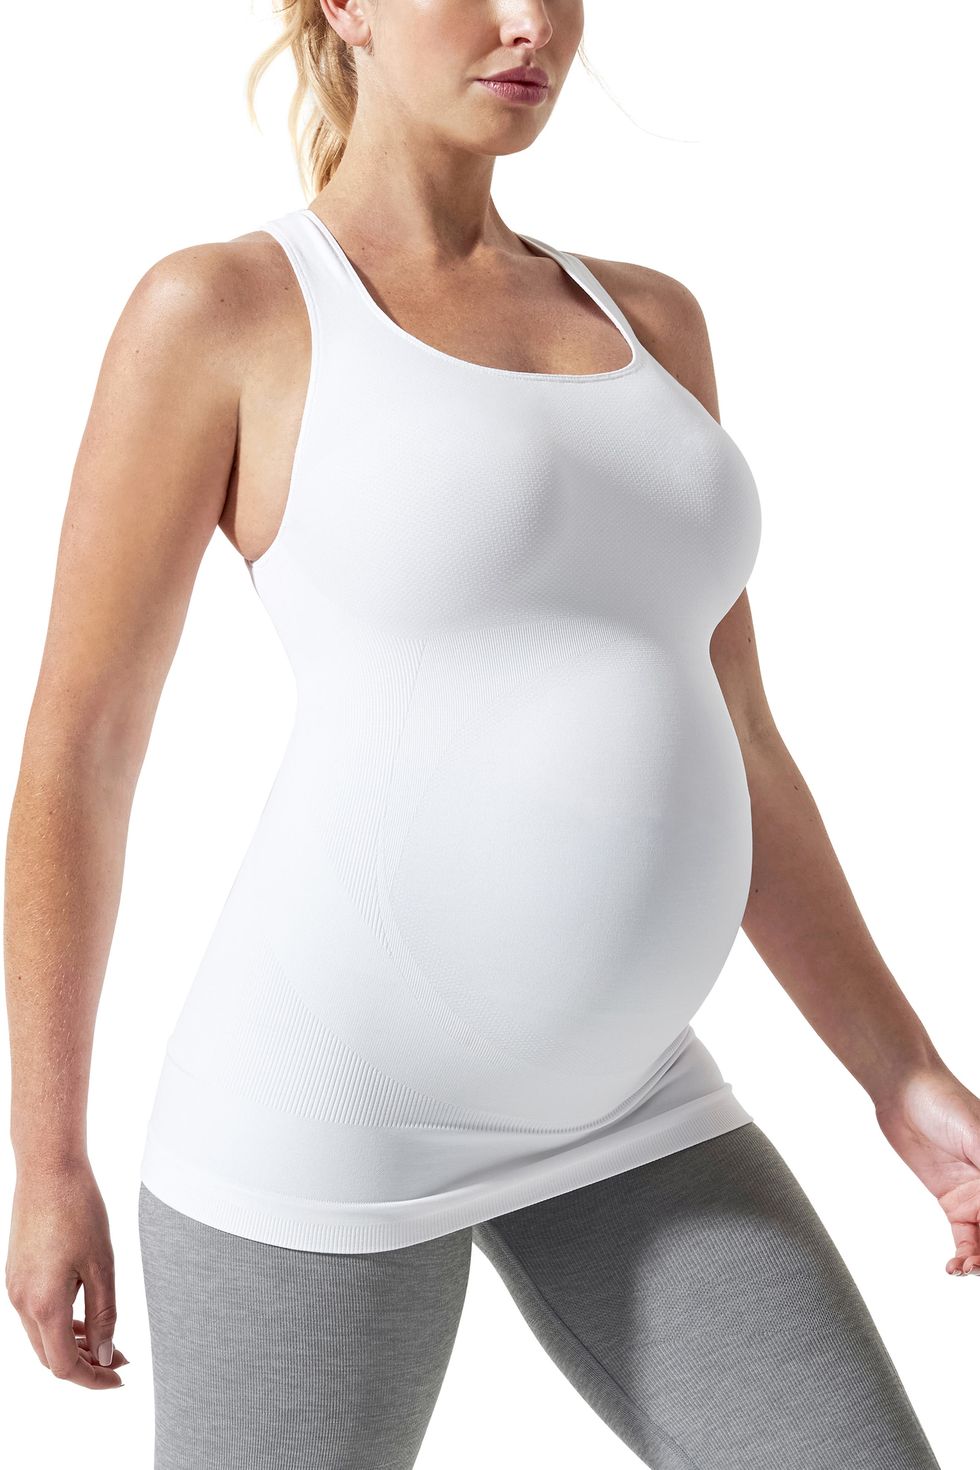 Aofa Pregnancy Breastfeeding Top, Maternity Nursing Tank Tops